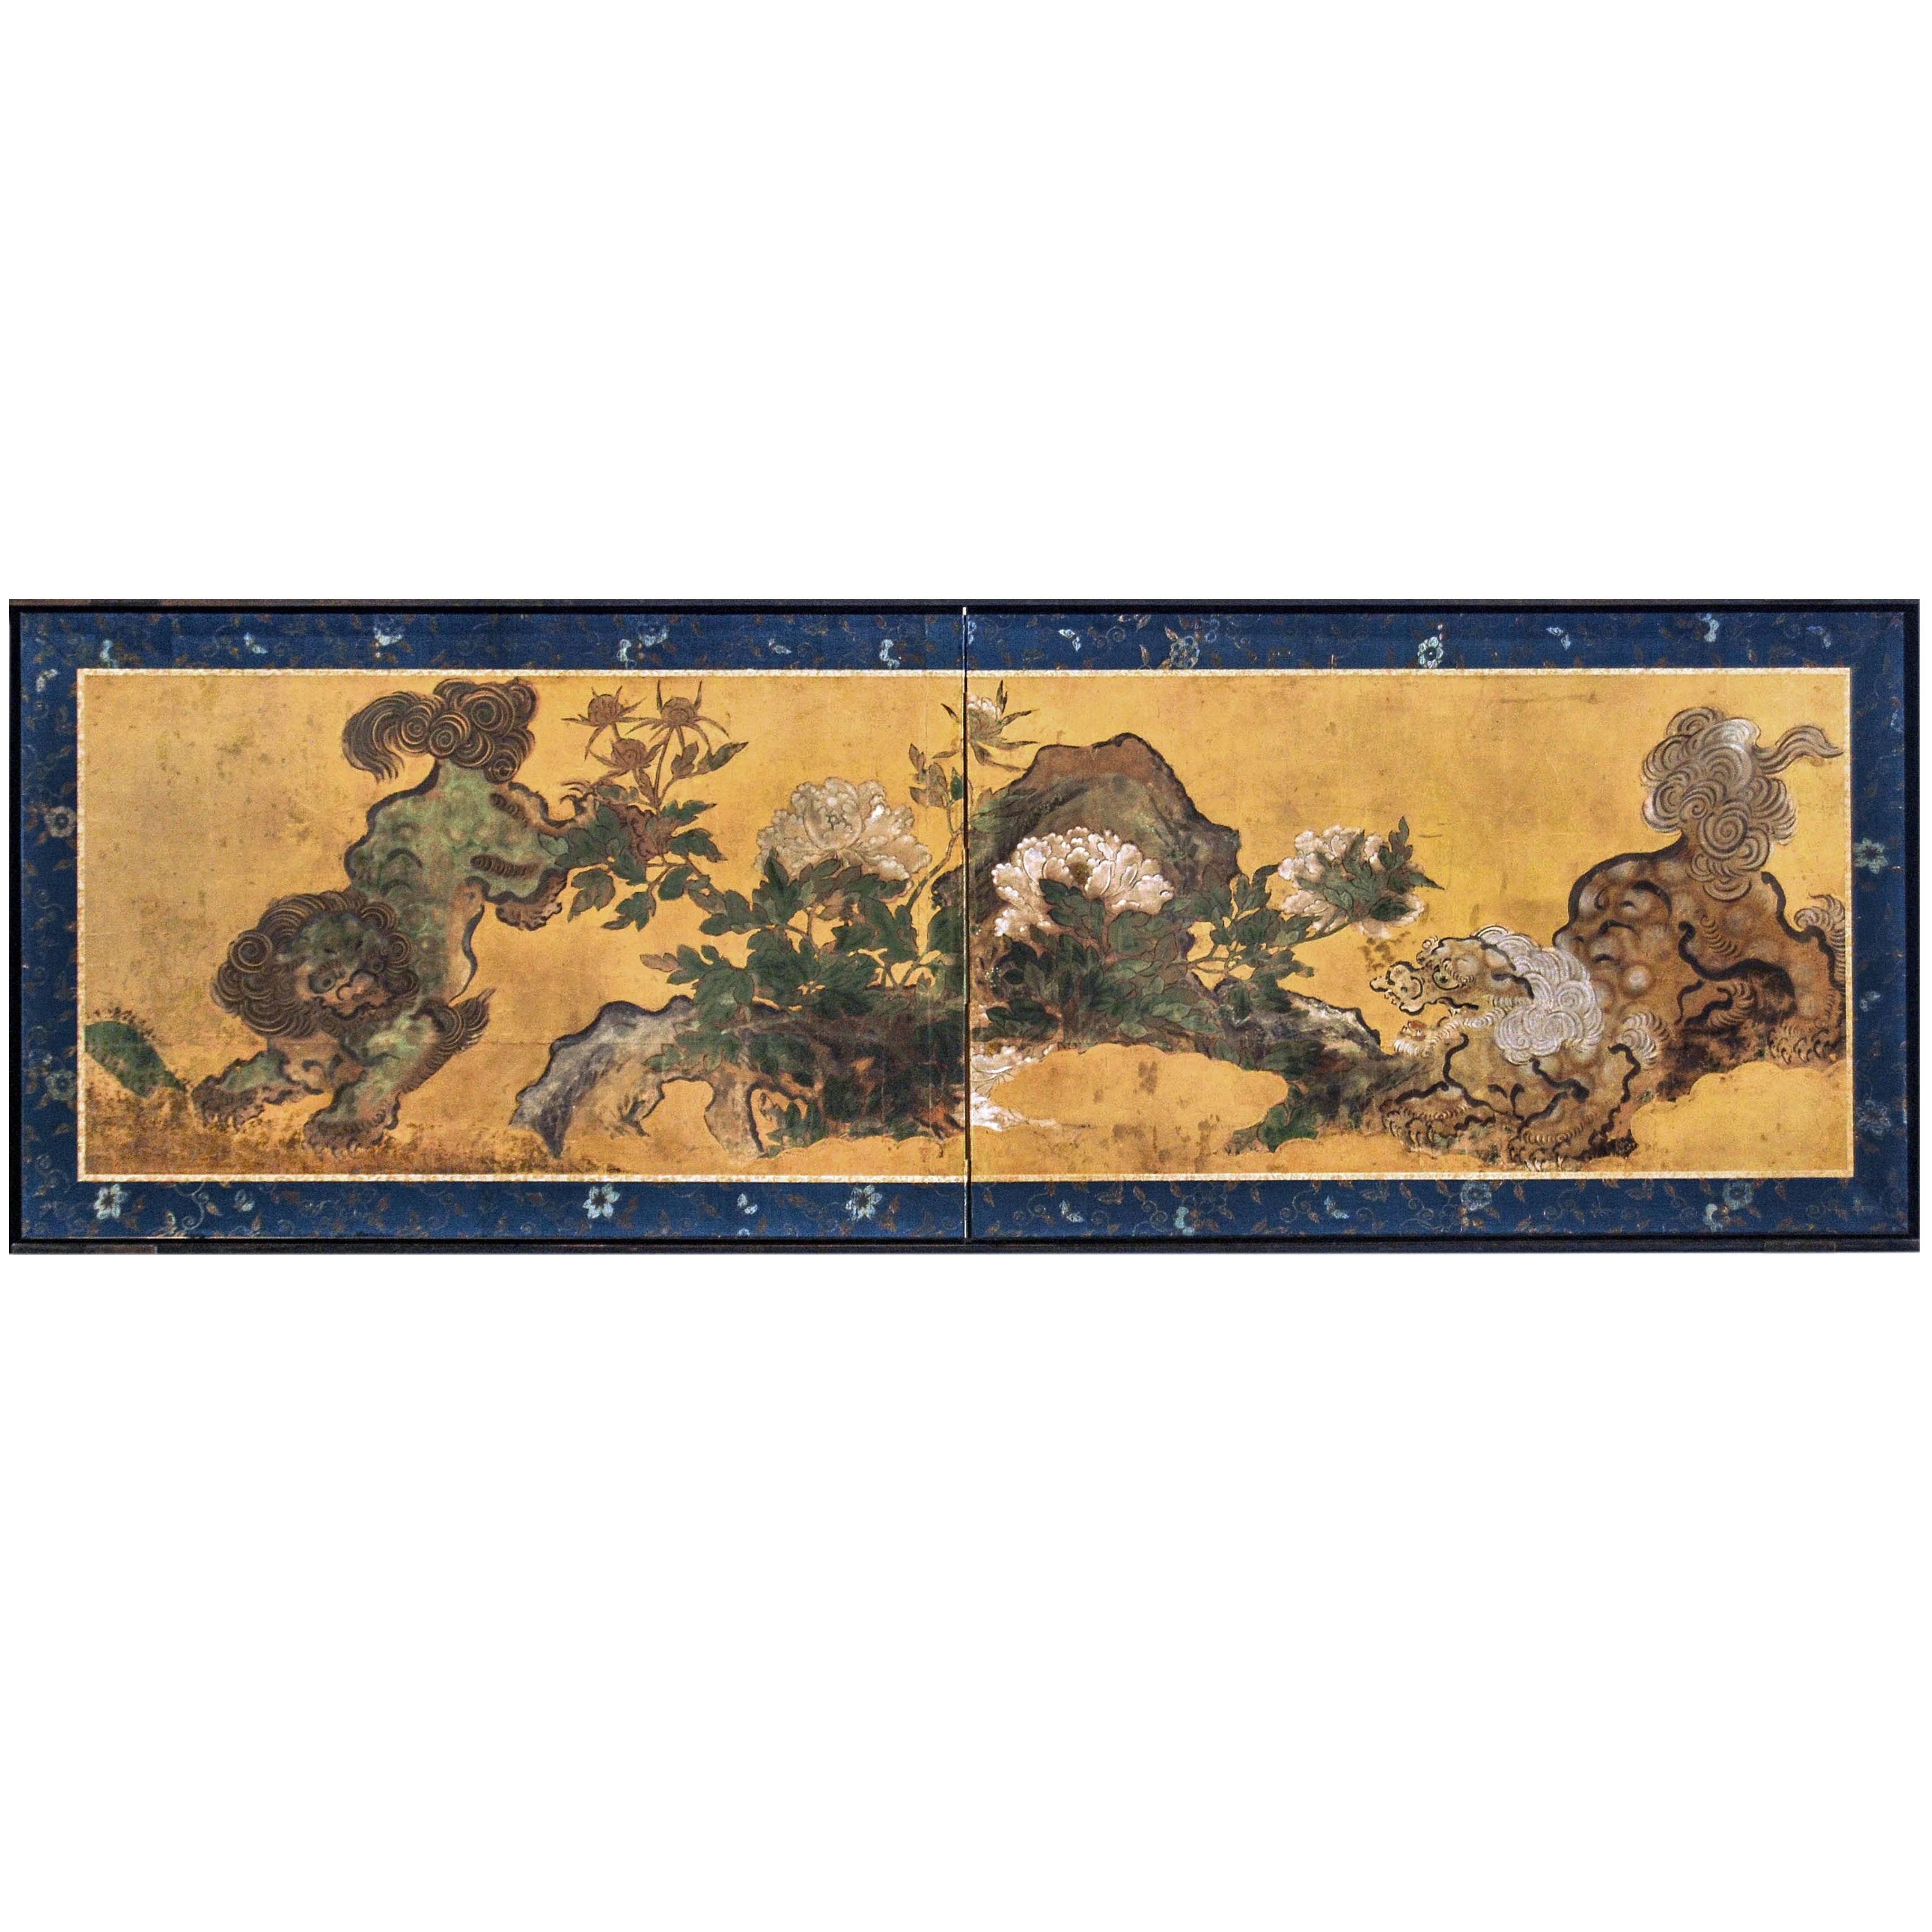 Antique Japanese Two Panel Karashishi Screen, Edo Period, circa 17th Century